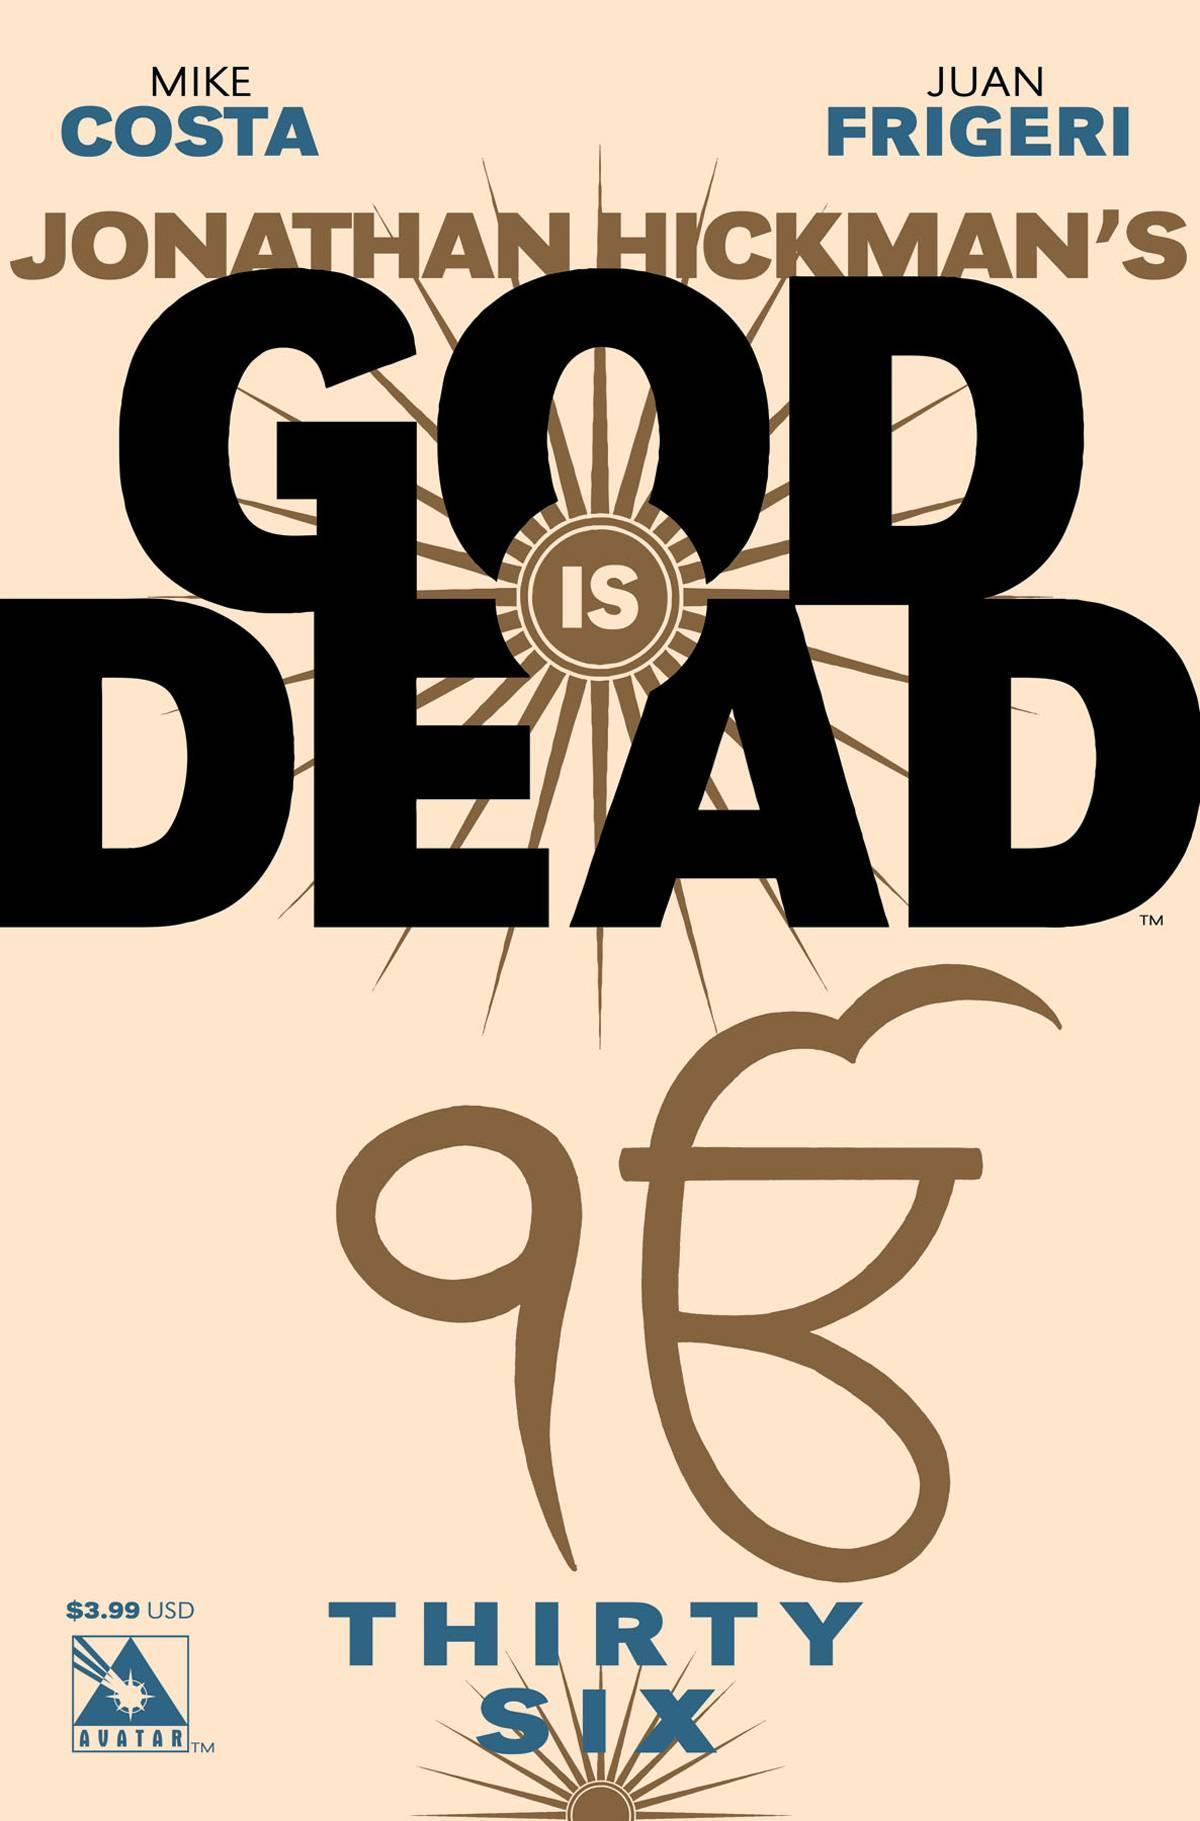 GOD IS DEAD #36 - Kings Comics